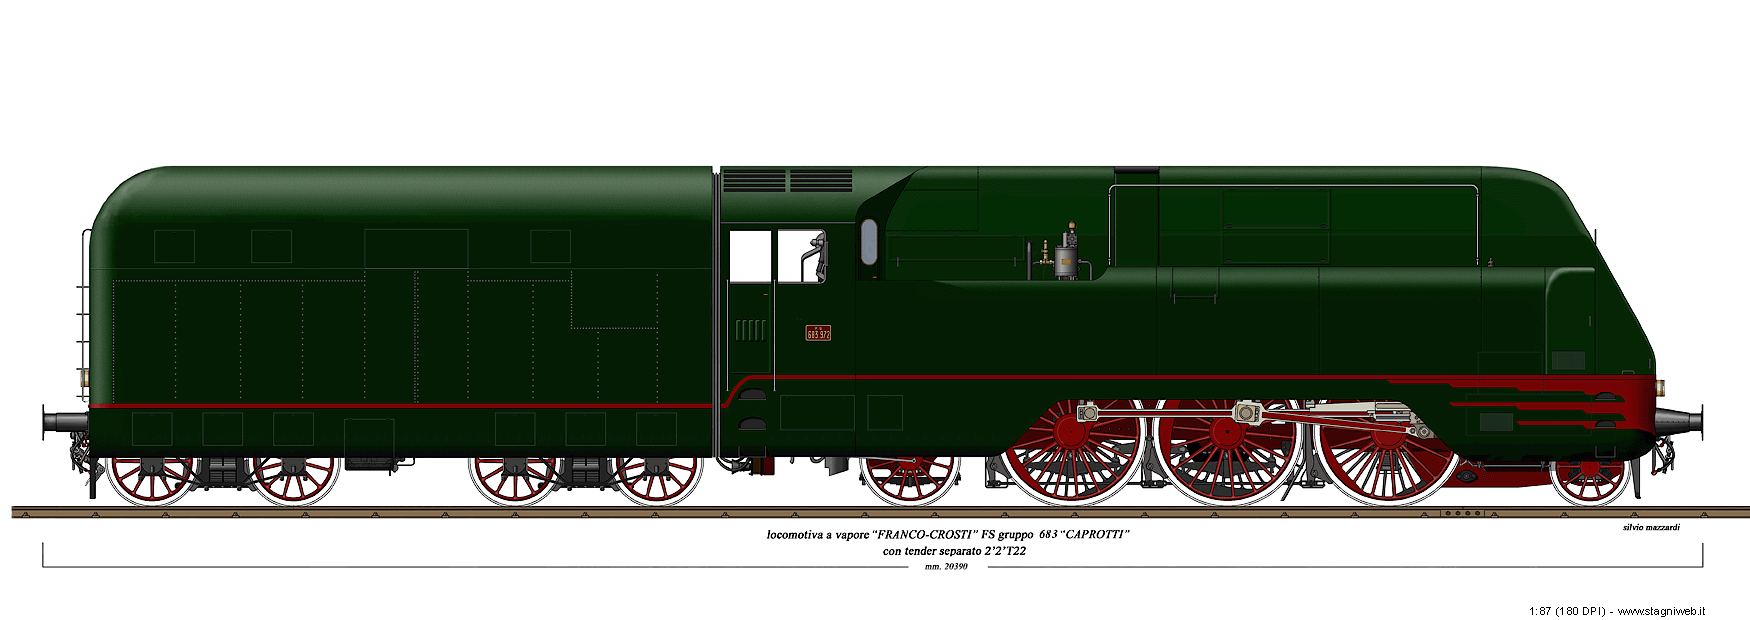 Locomotive a vapore - Gr. 683 Franco-Crosti carenata